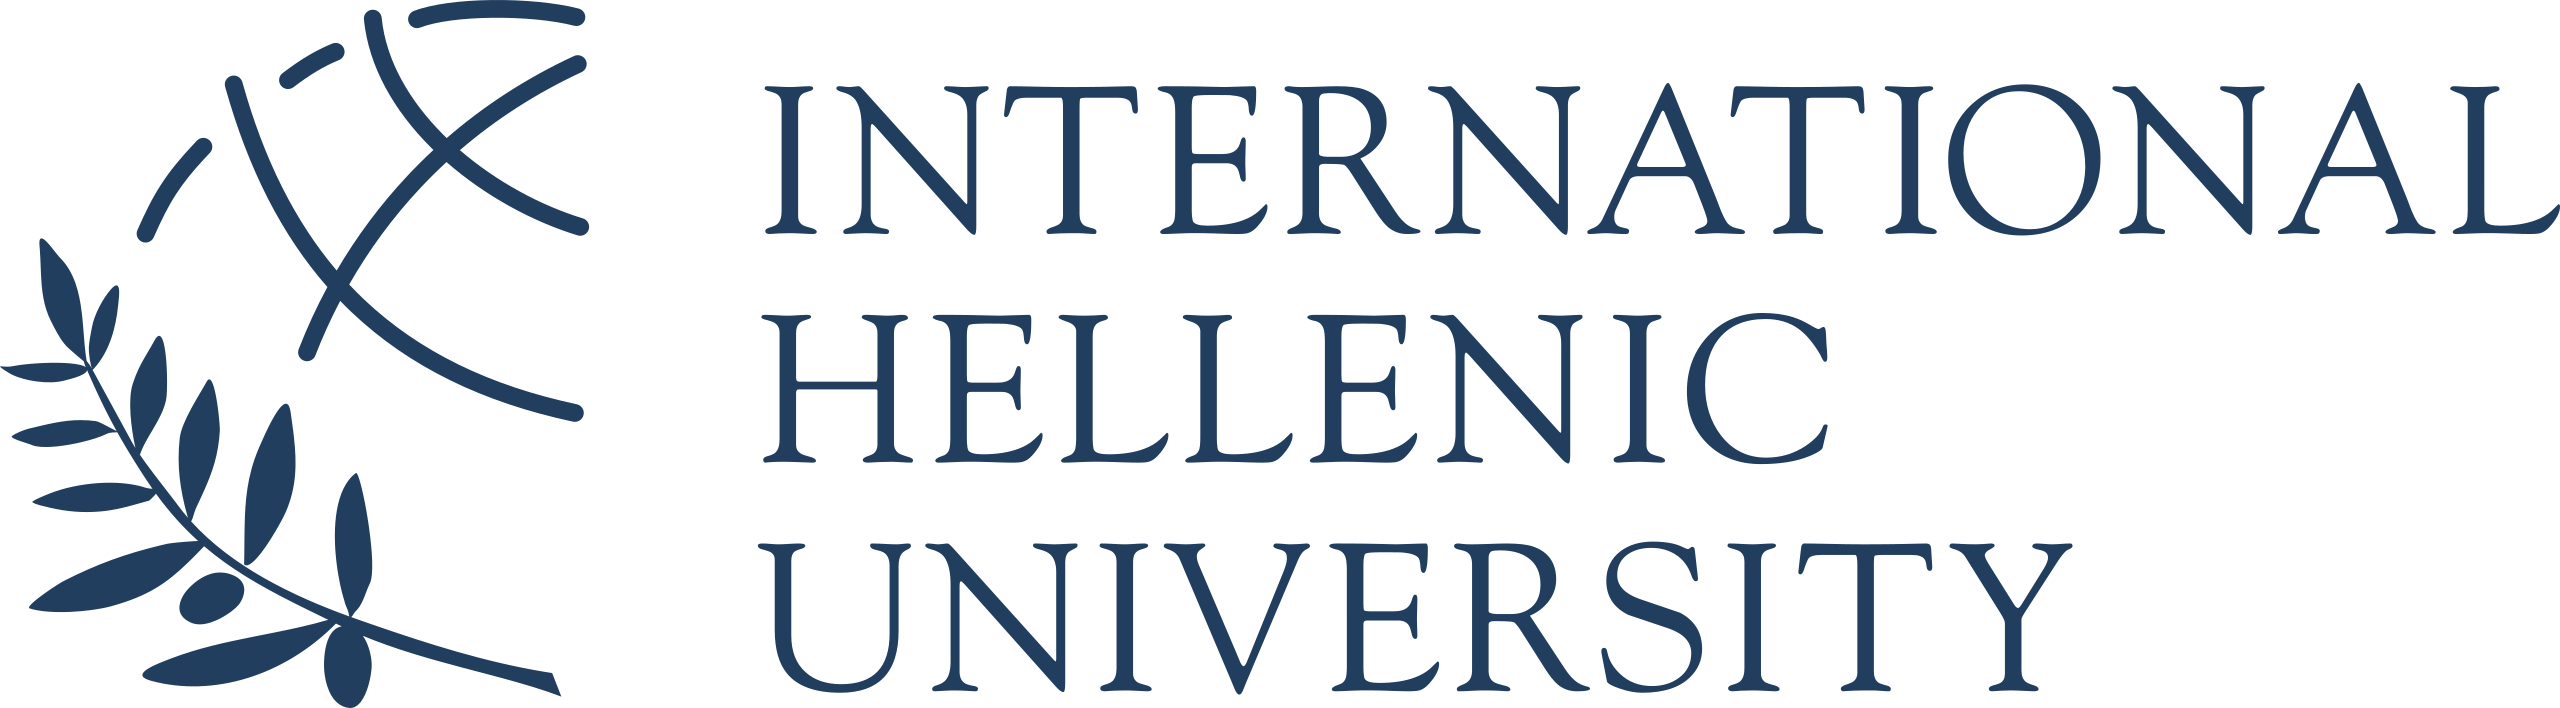 International_Hellenic_University_logo.svg